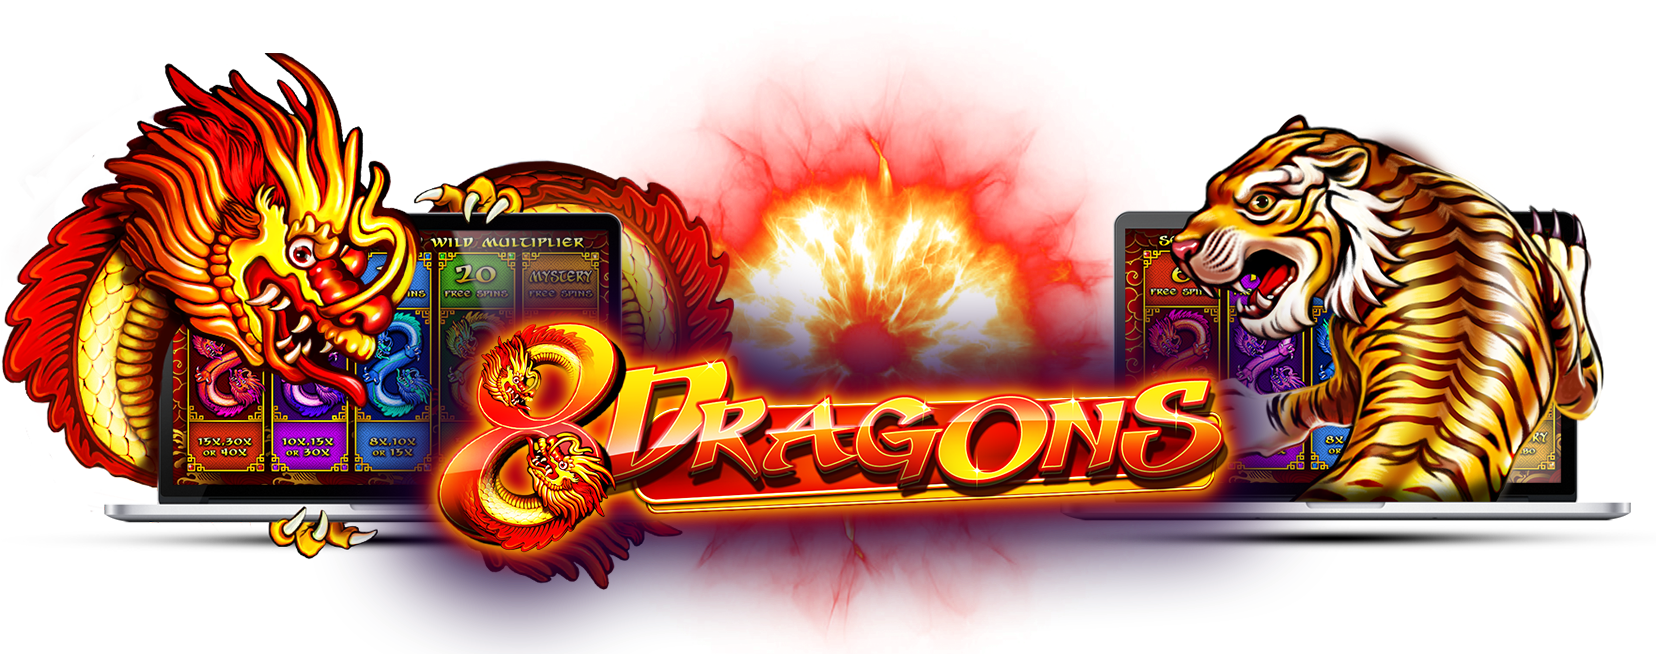 8 Dragons Slot Game Artwork PNG image